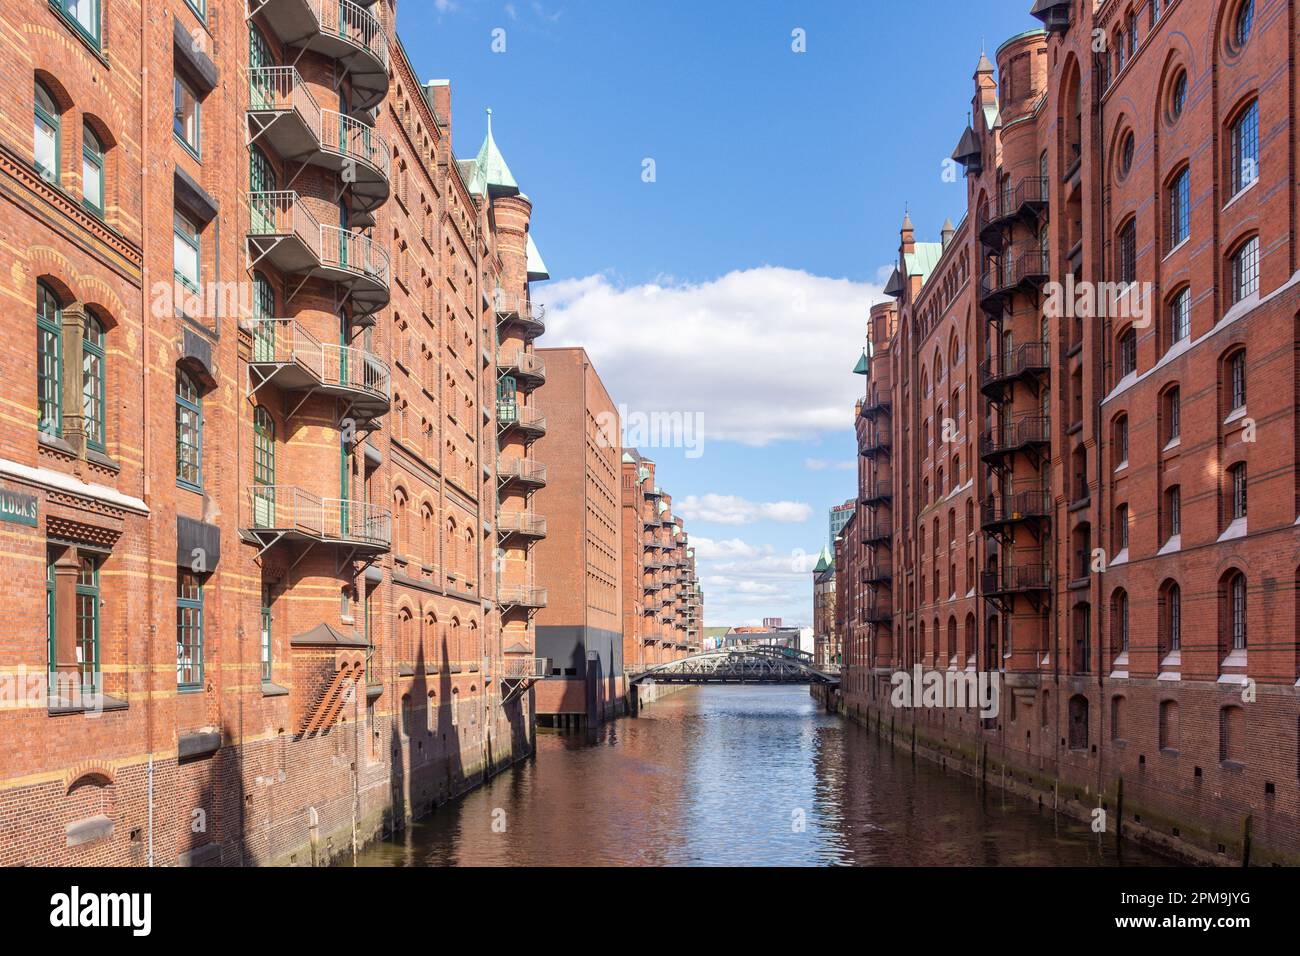 Old warehouses on canal, Speicherstadt District, HalfenCity Quarter, Hamburg, Hamburg Metropolitan Region, Federal Republic of Germany Stock Photo